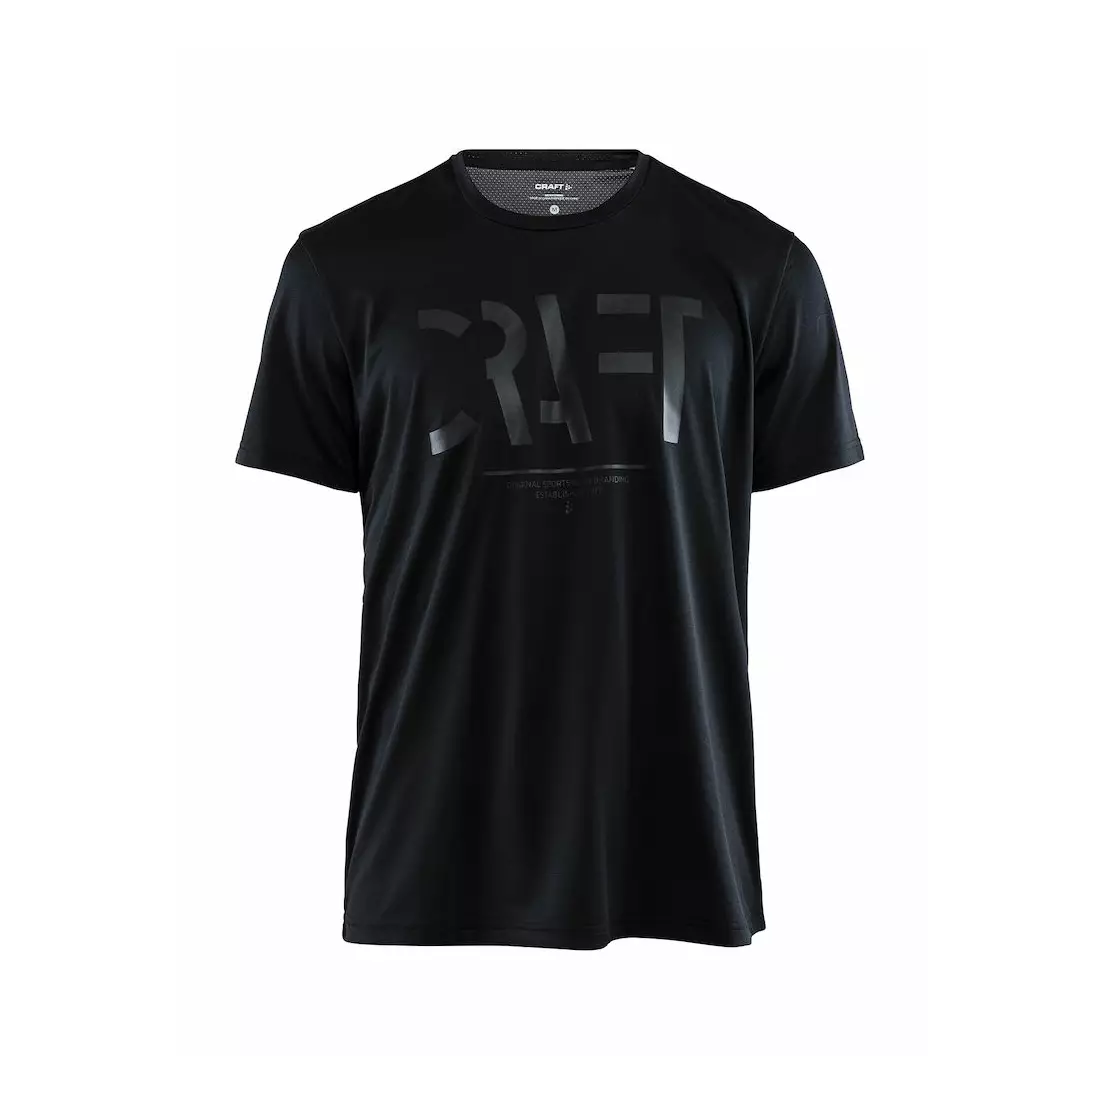 CRAFT EAZE MESH pánske športové / bežecké tričko, čierne 1907018-999000